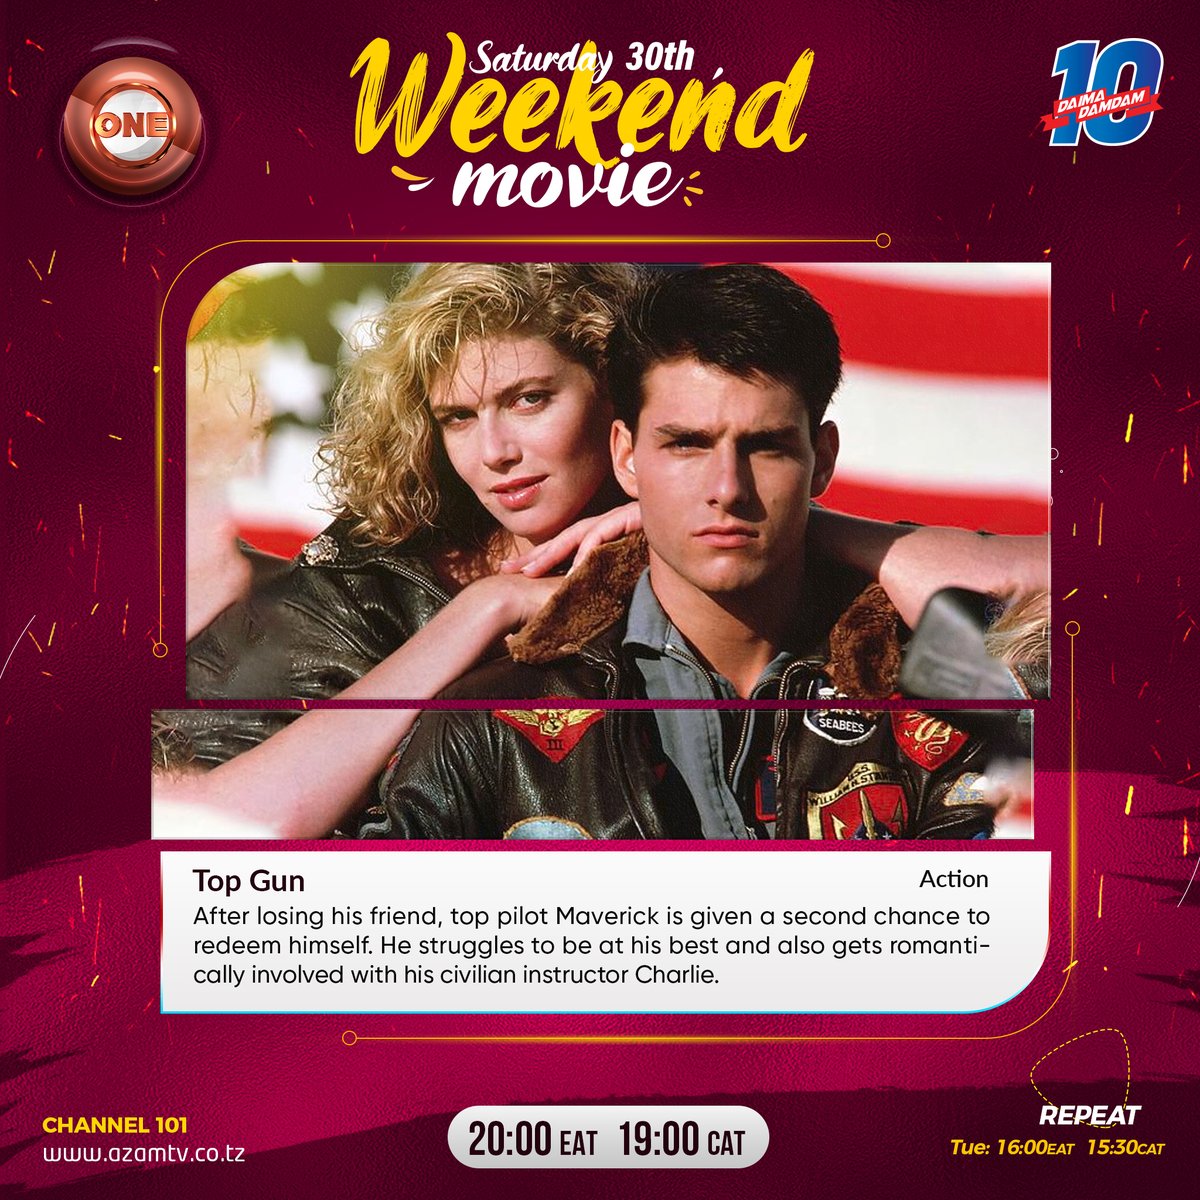 Enjoy tonight's Weekend Movie  'Top Gun' on 📺 #AzamOne Channel 101 #AzamTV decoder at 19:00 CAT.
#Azamtv🇿🇼 #entertainmentforeverybody